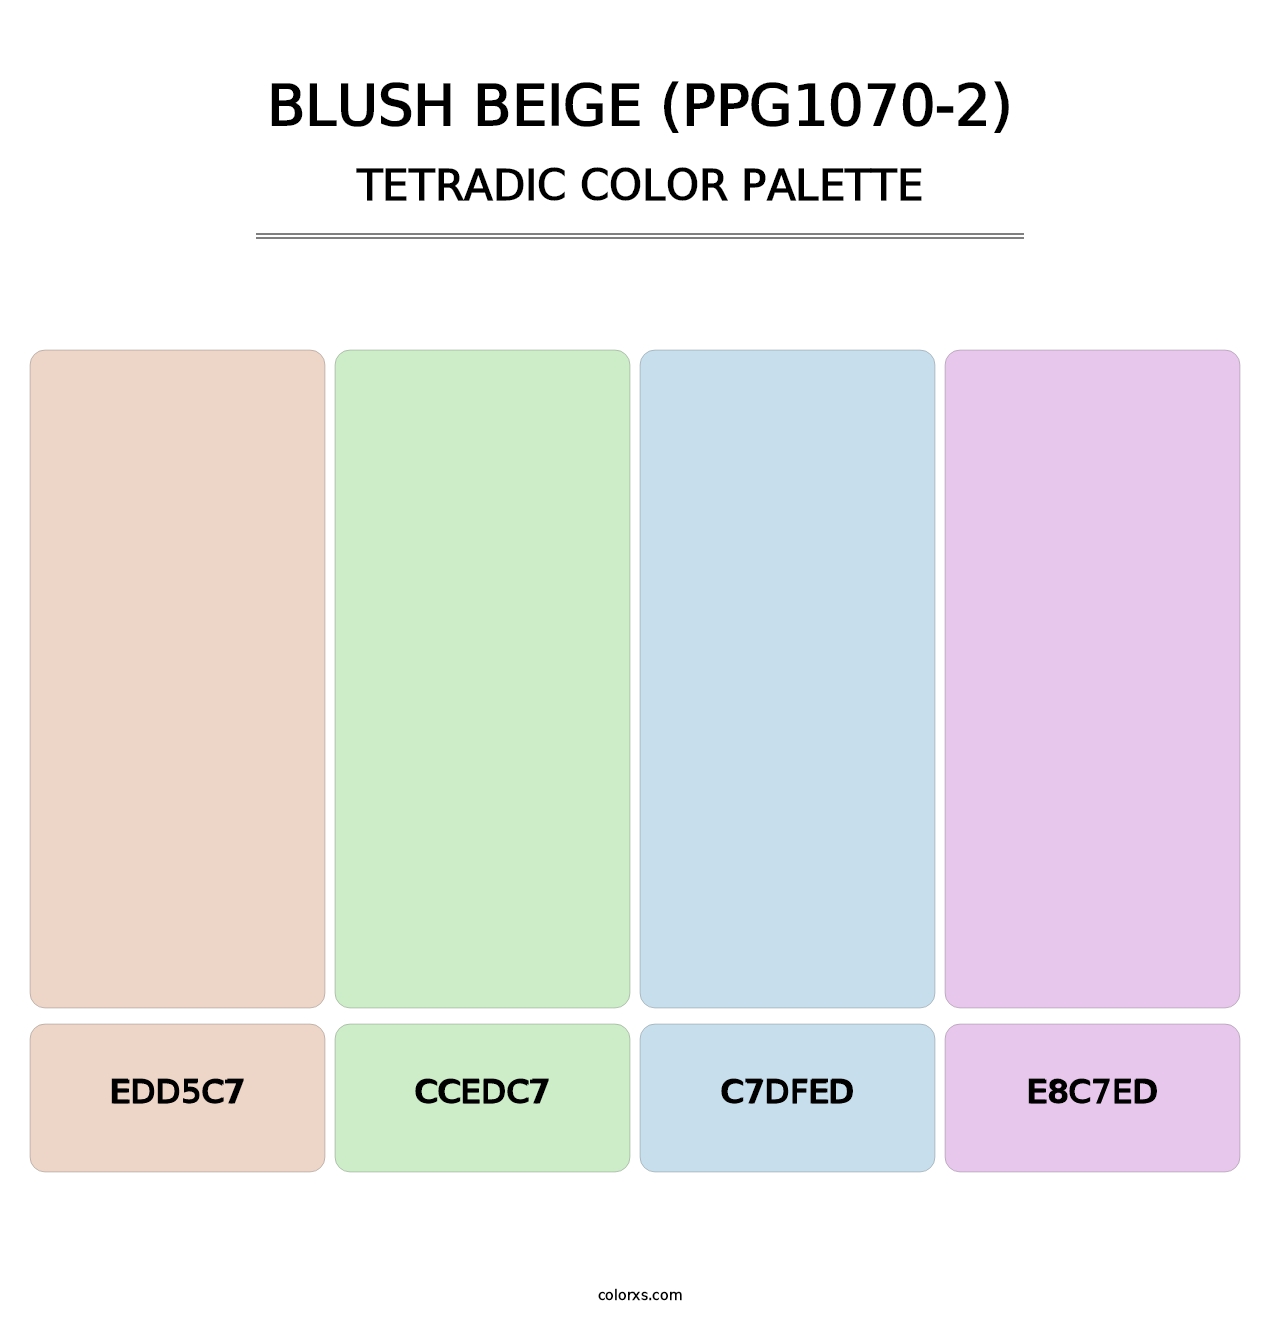 Blush Beige (PPG1070-2) - Tetradic Color Palette